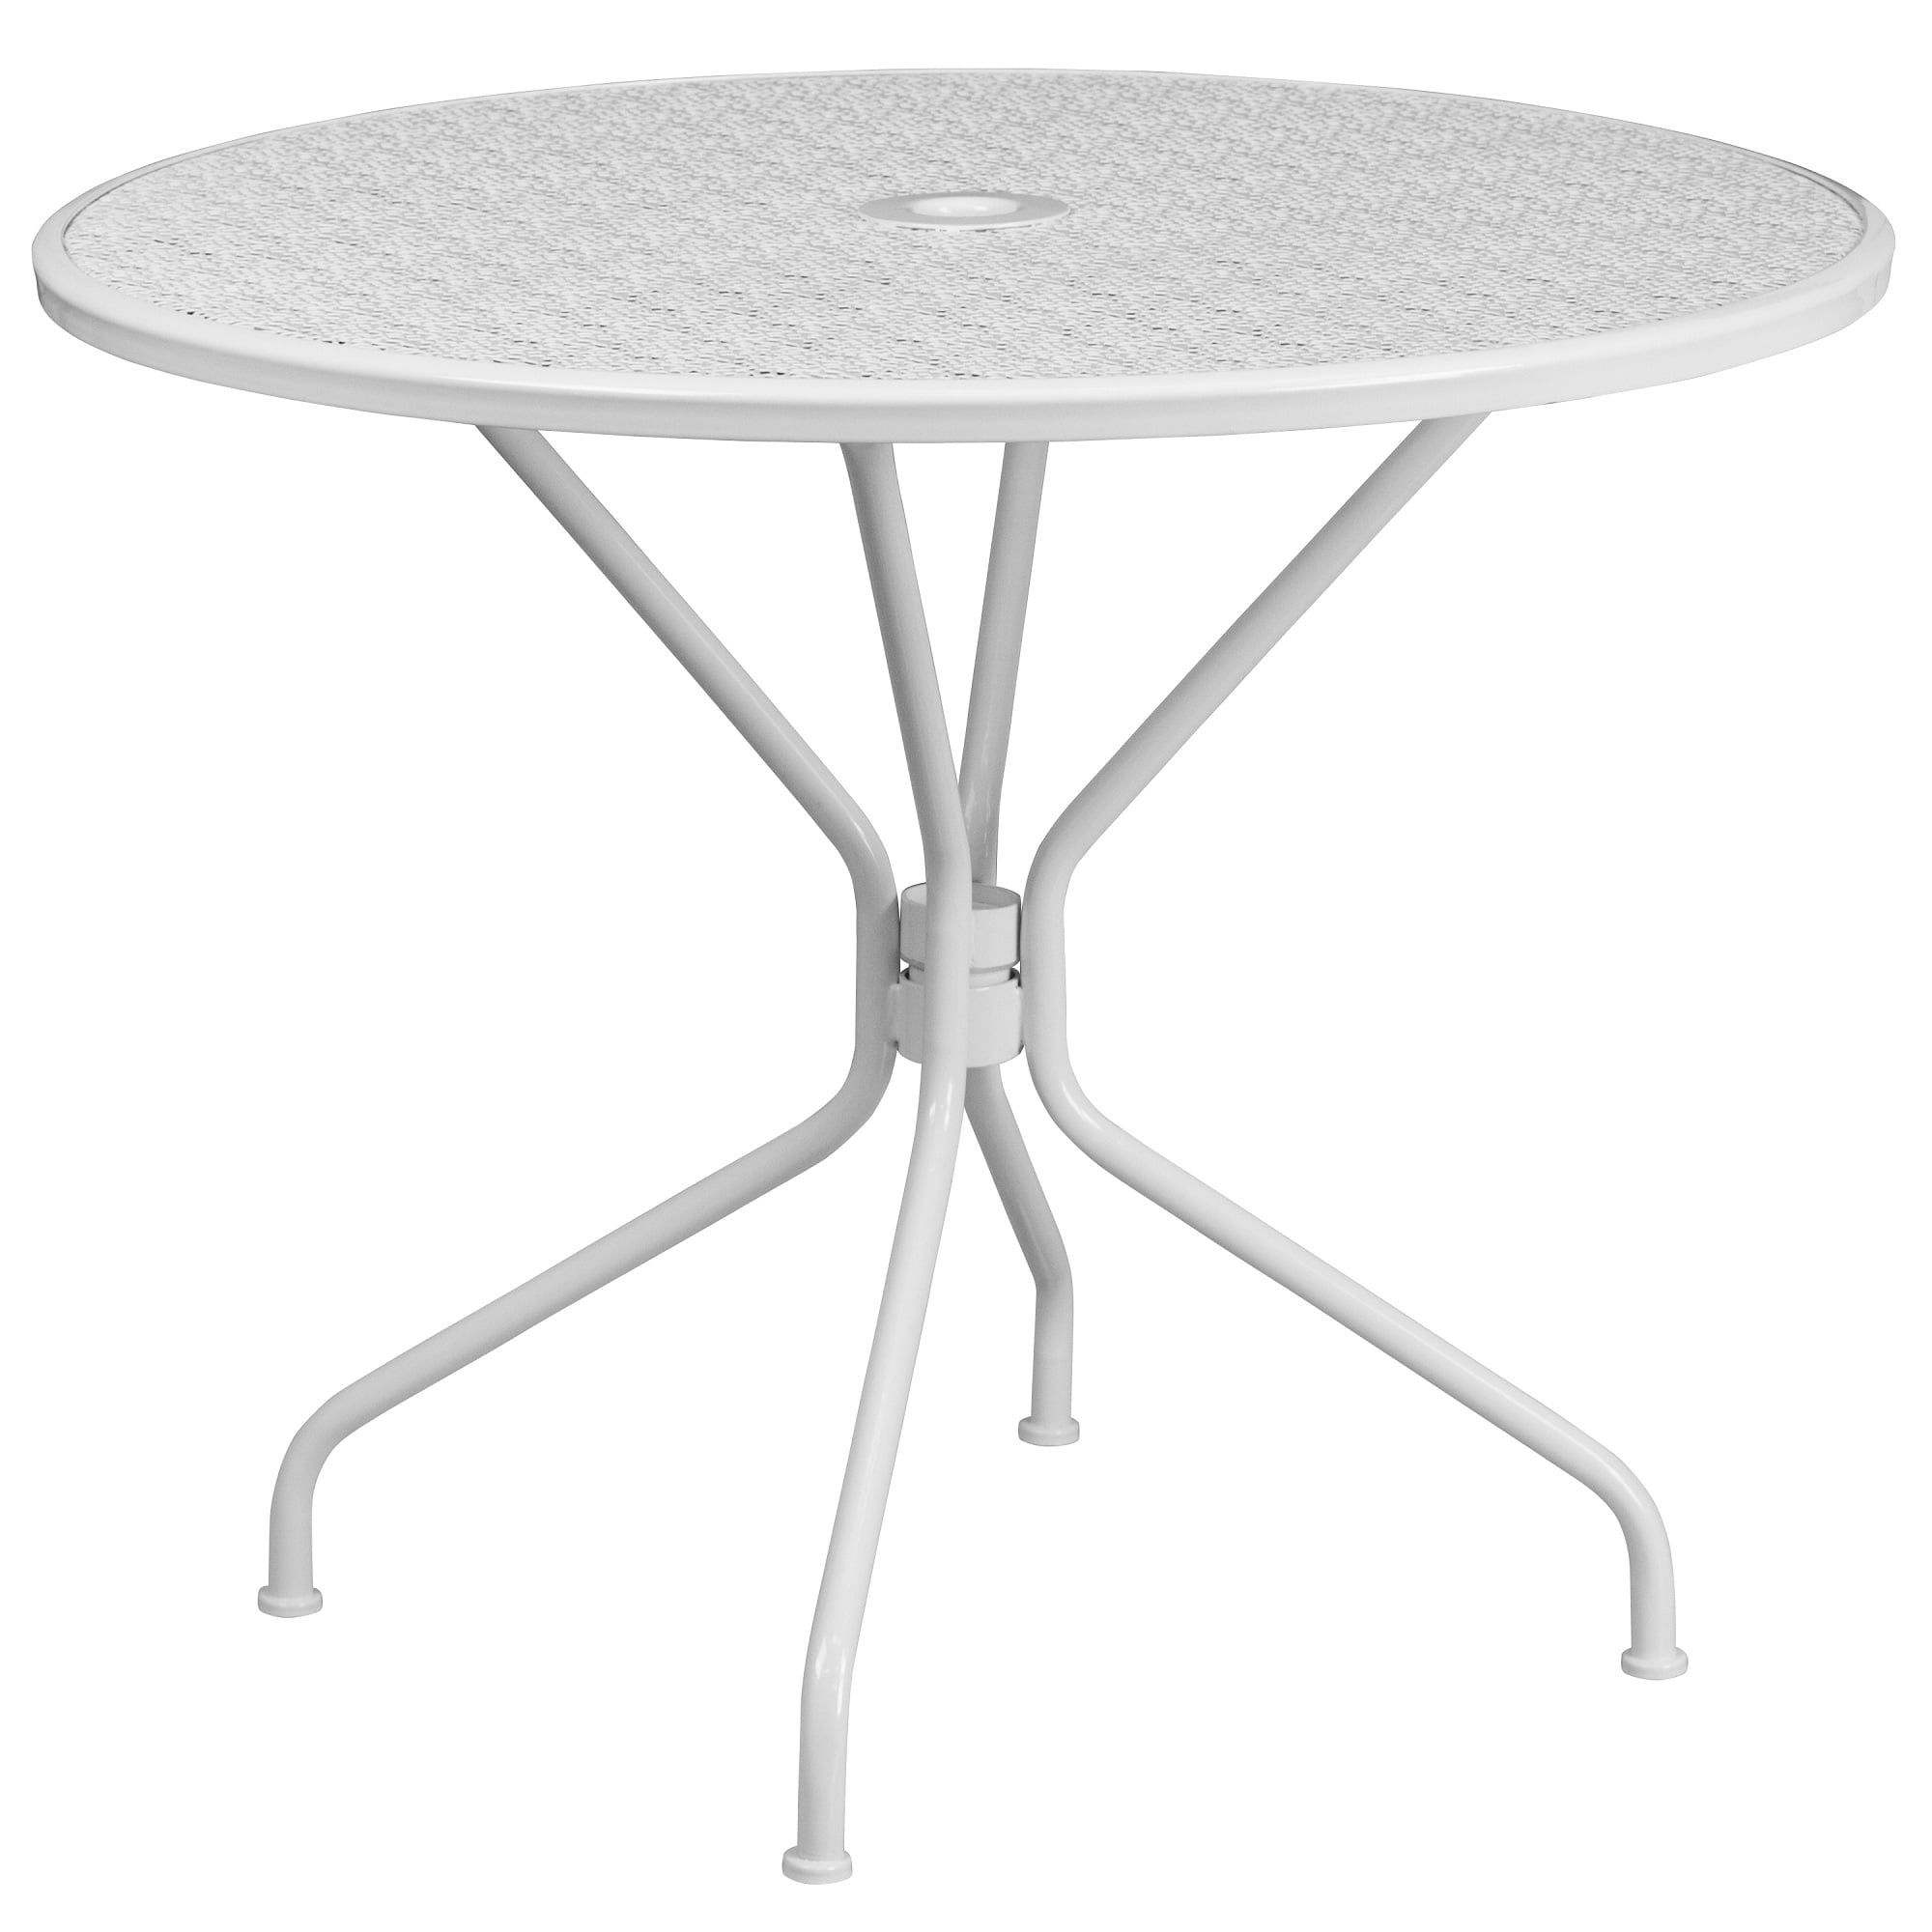 35 25 White Contemporary Round Outdoor, Patio Table White Round